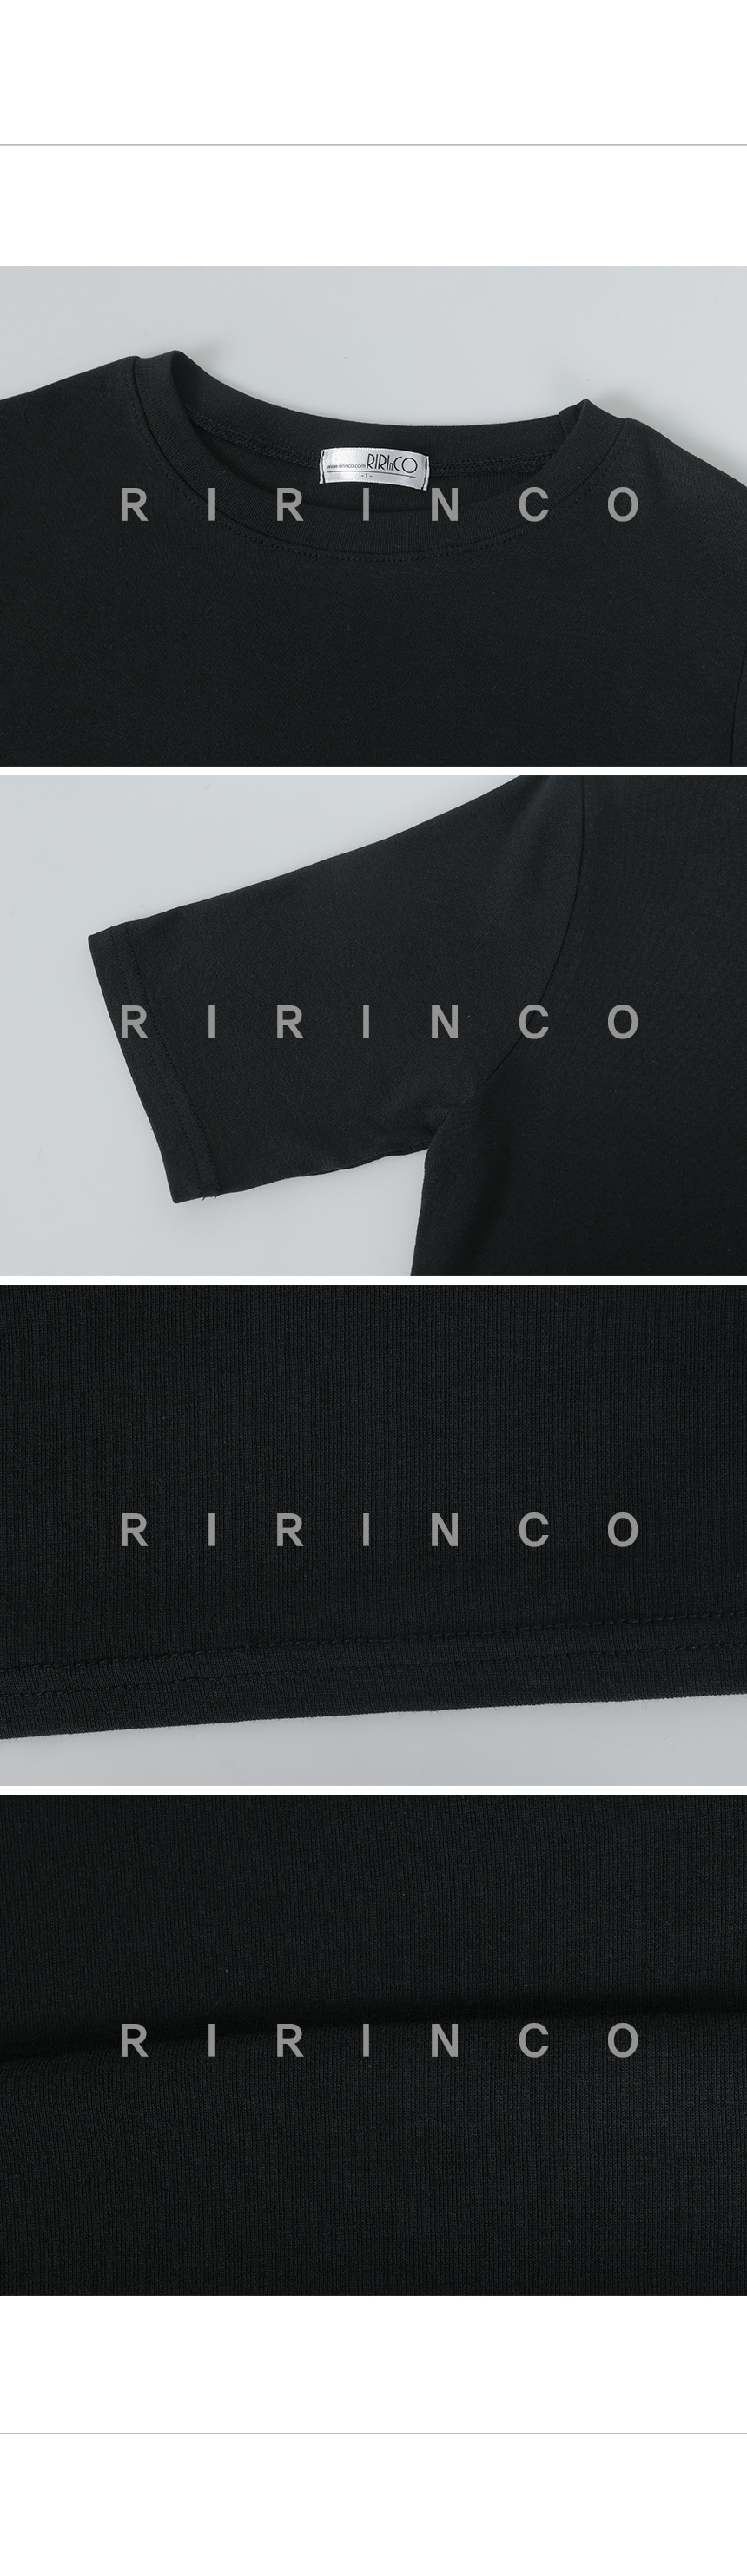 RIRINCO ラウンドネック5分丈Tシャツ